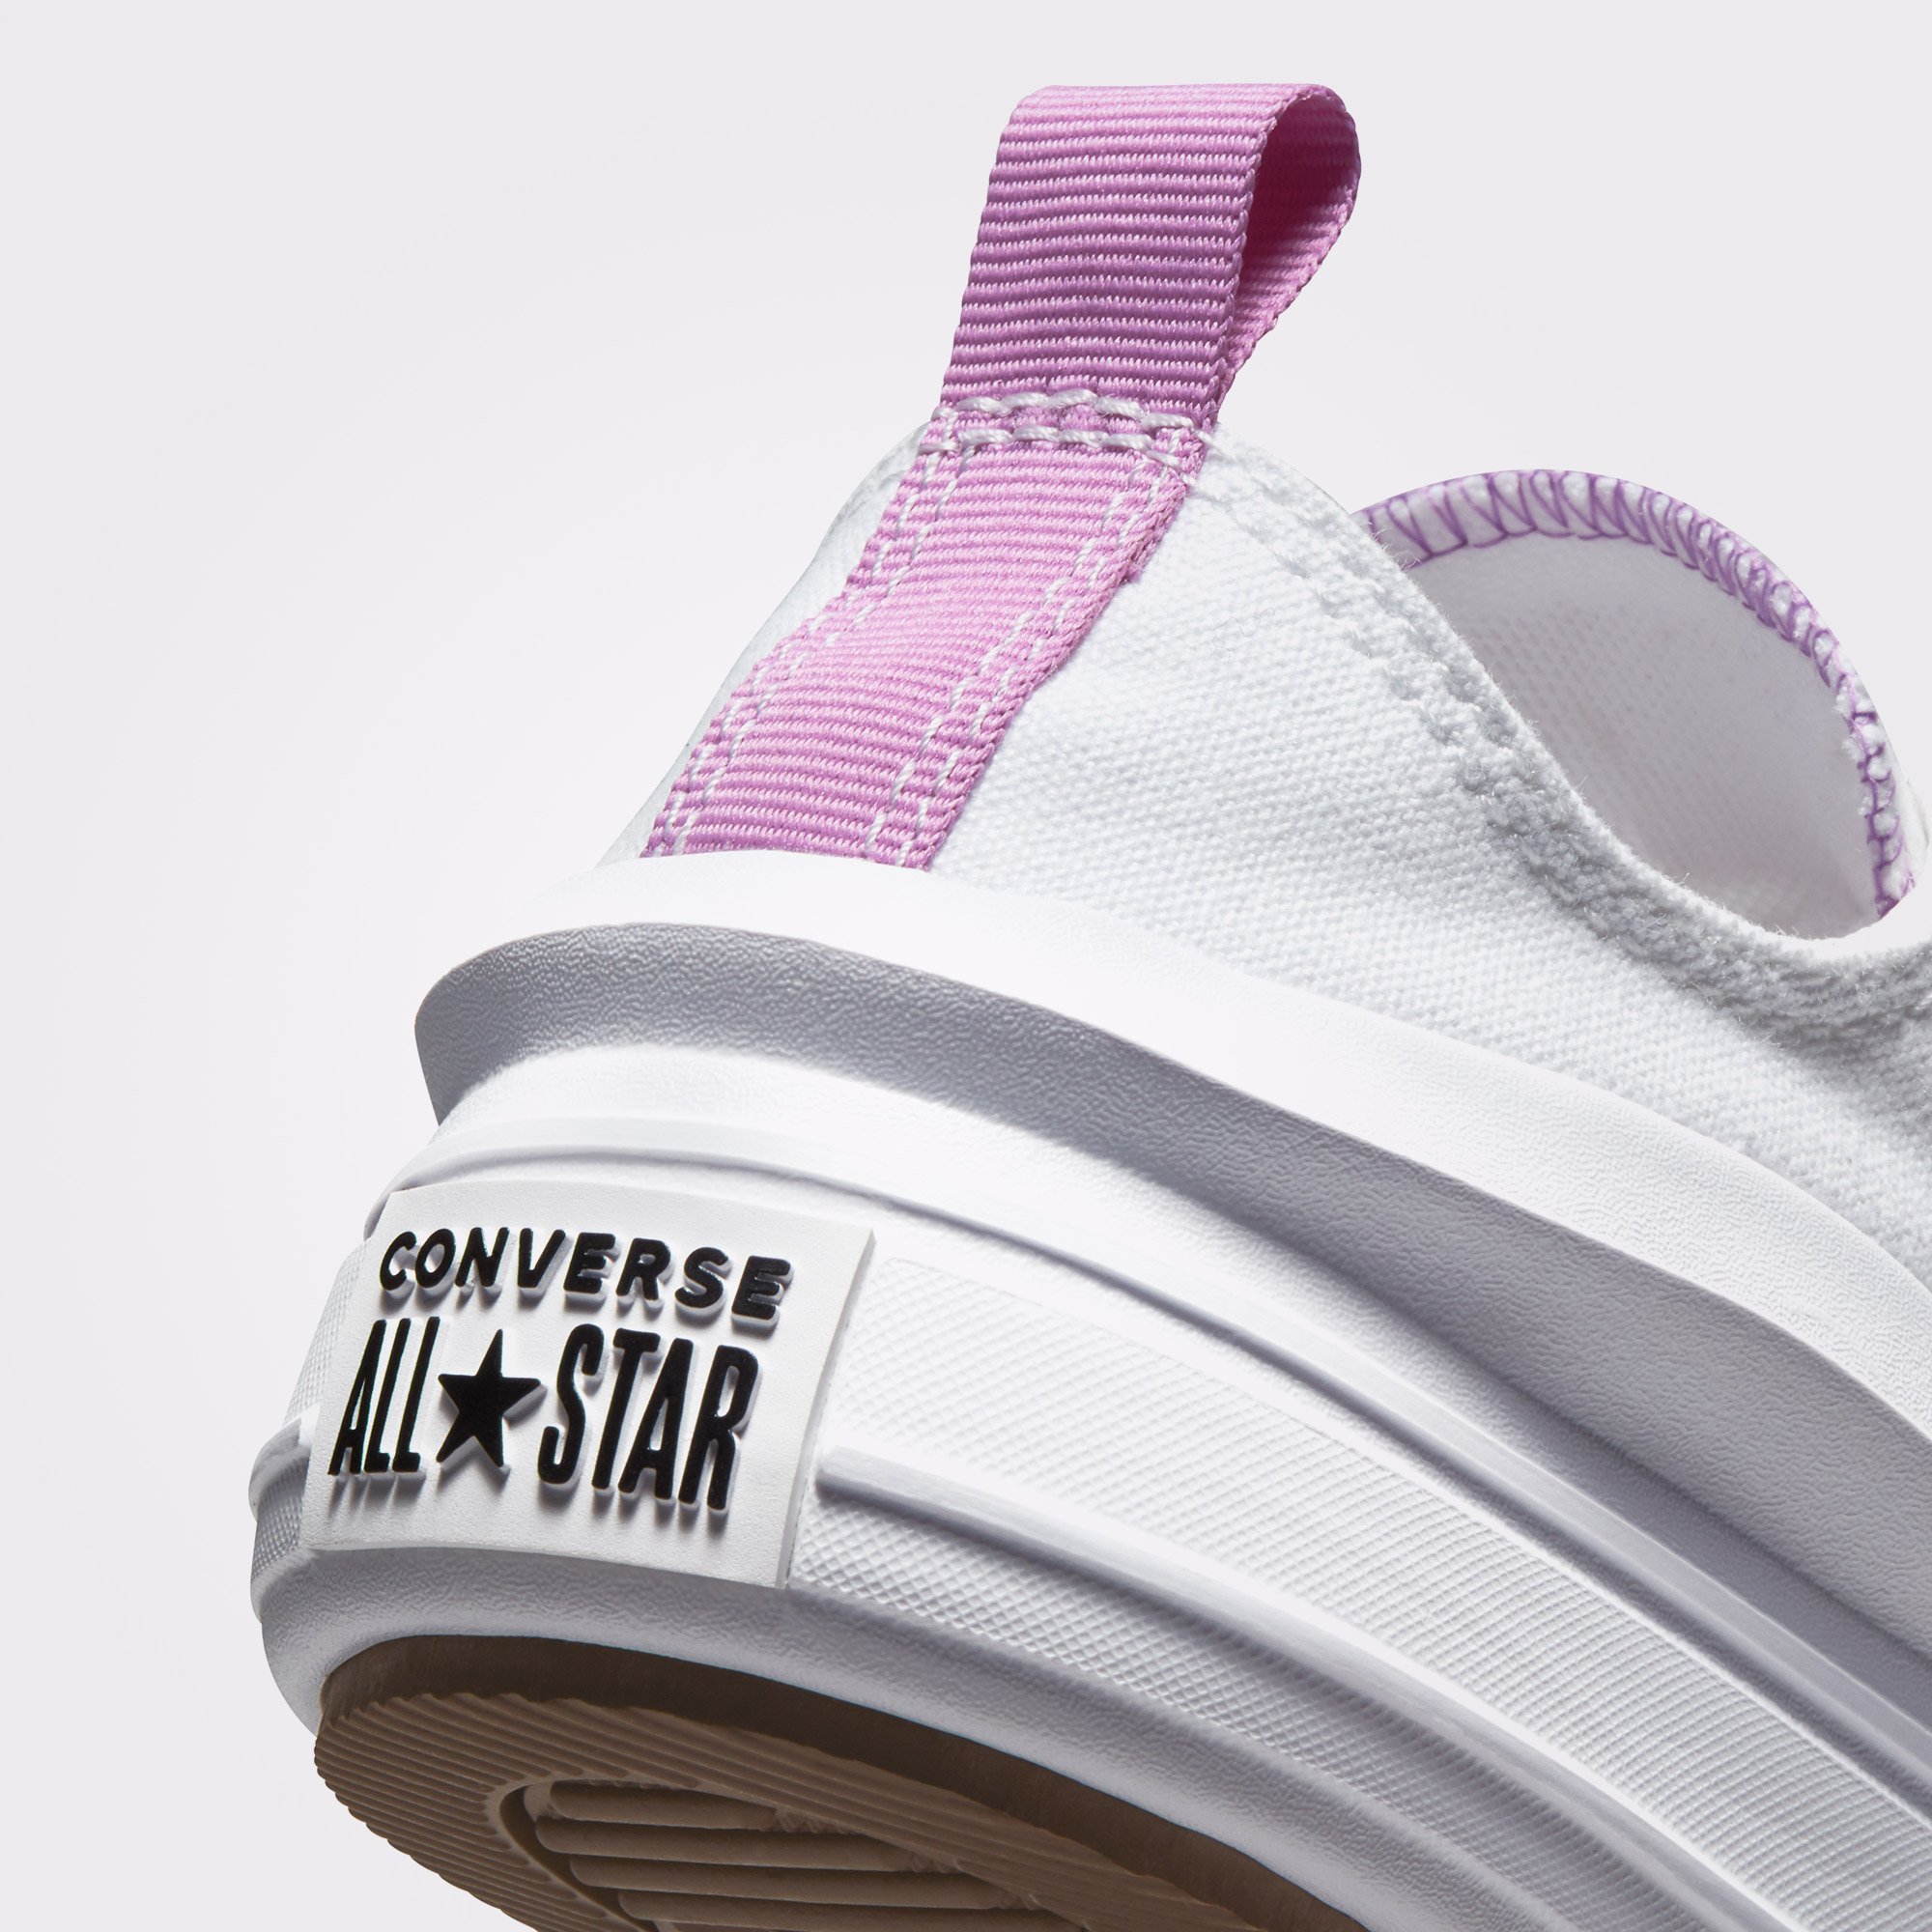 Converse Chuck Taylor All Star Move Çocuk Beyaz Platform Sneaker